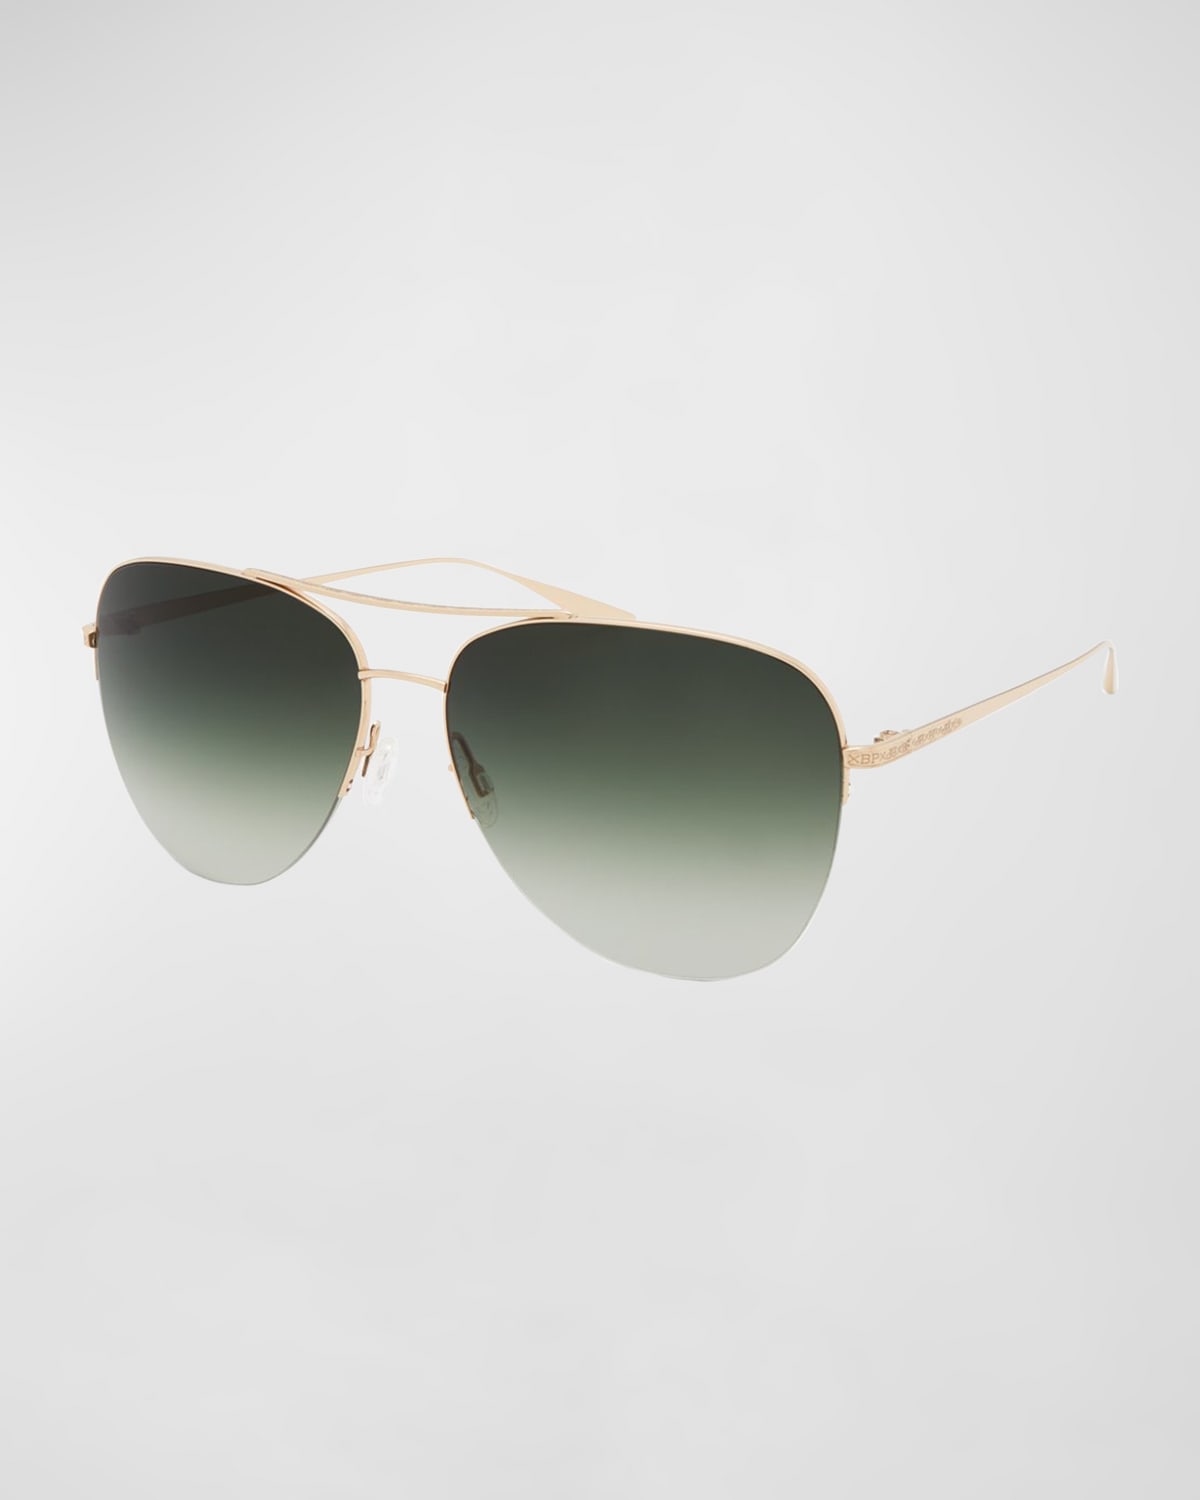 Chevalier Green Titanium Aviator Sunglasses